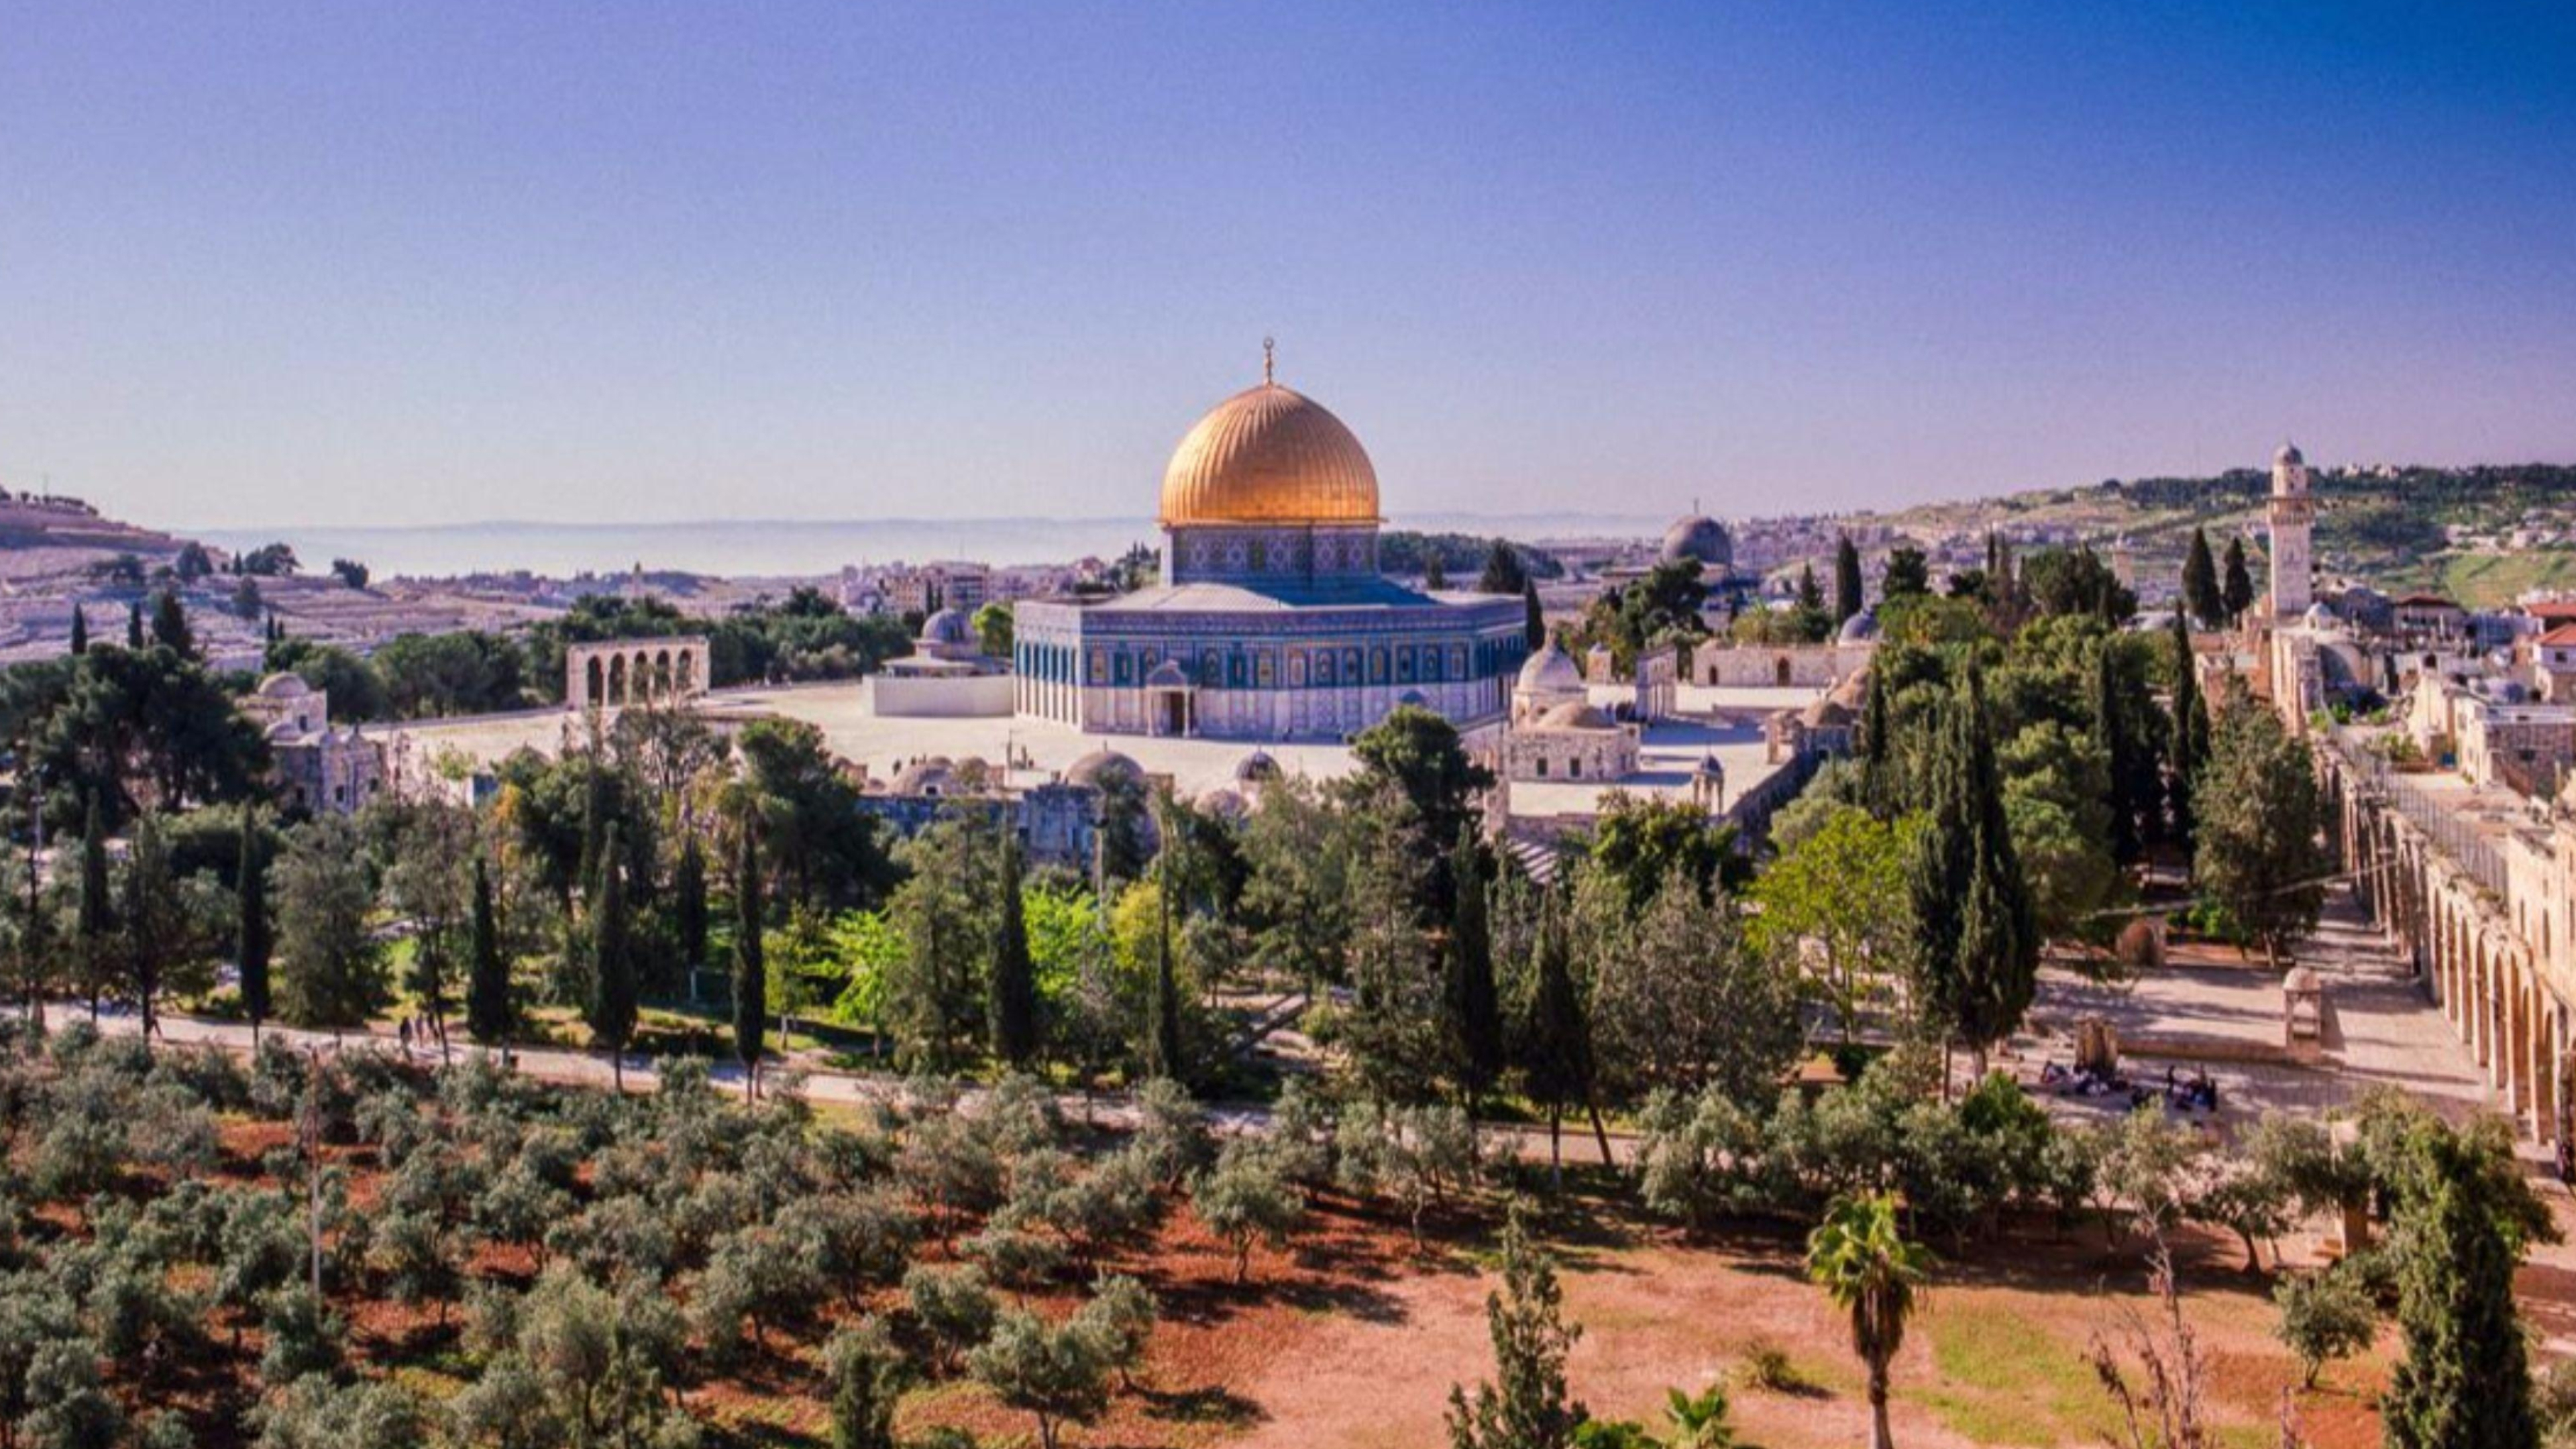 Jerusalem: Dome of the Rock, An Islamic shrine. 3840x2160 4K Wallpaper.